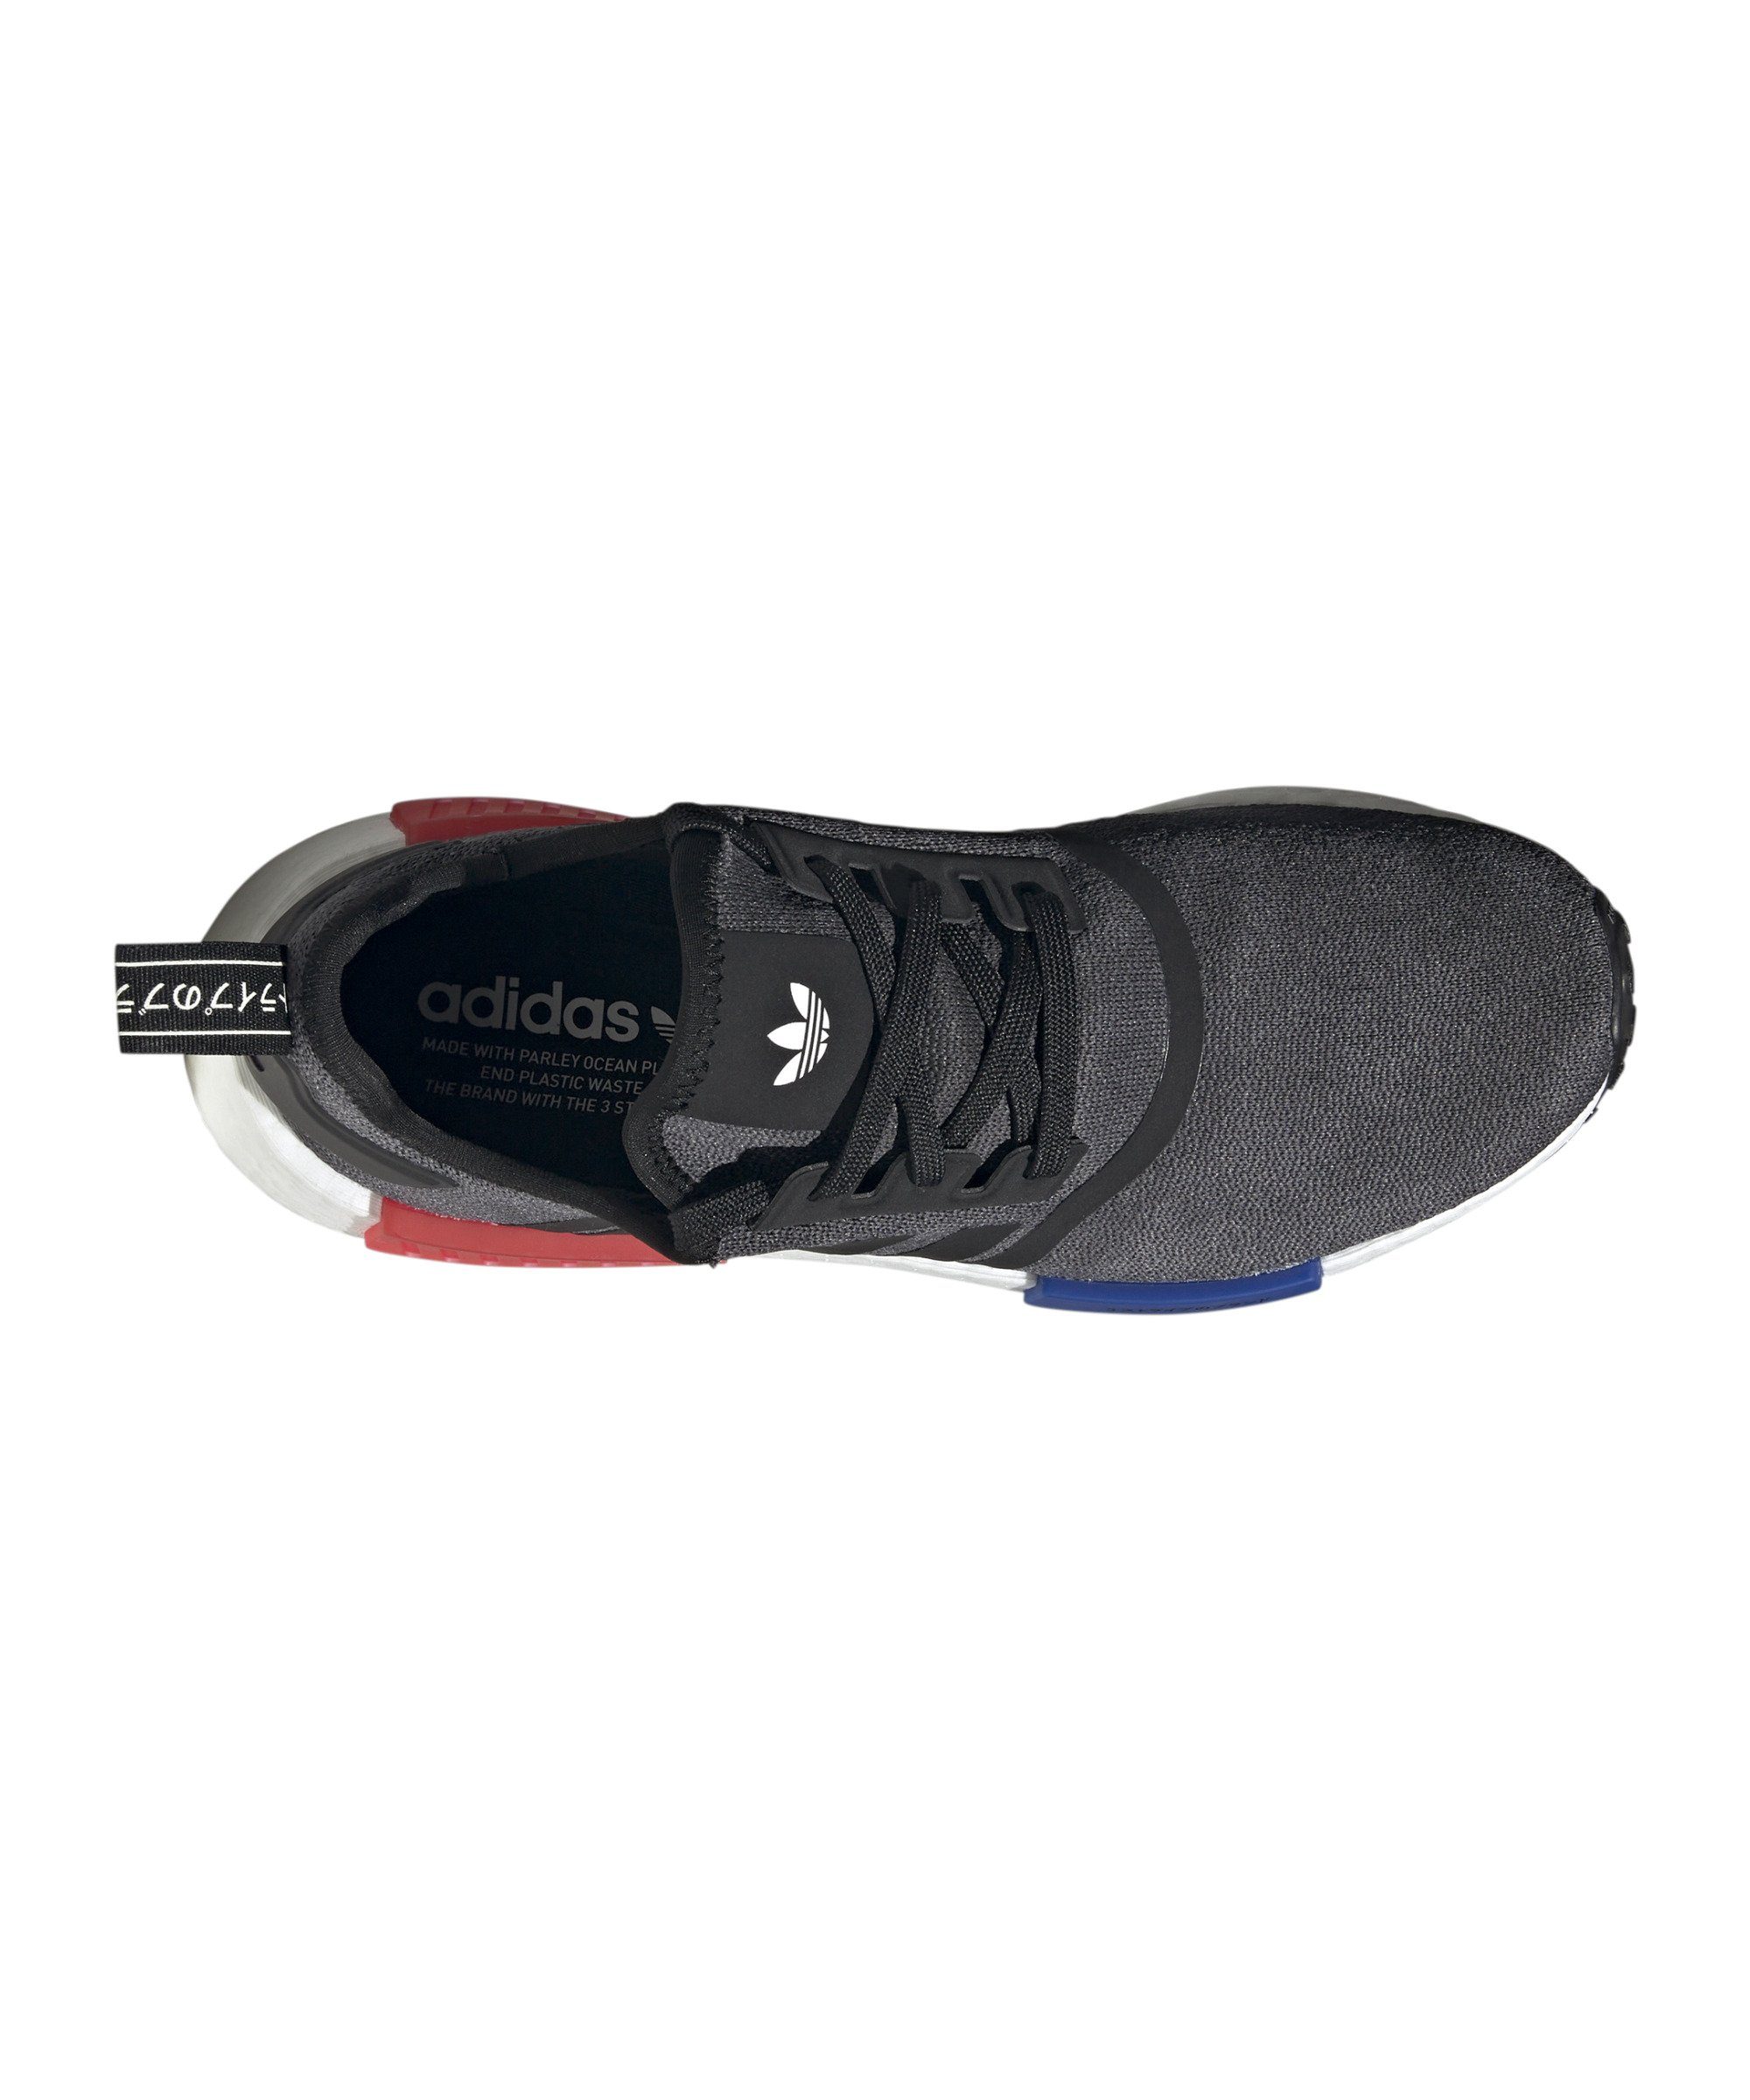 adidas Originals NMD_R1 Sneaker schwarzblaurot